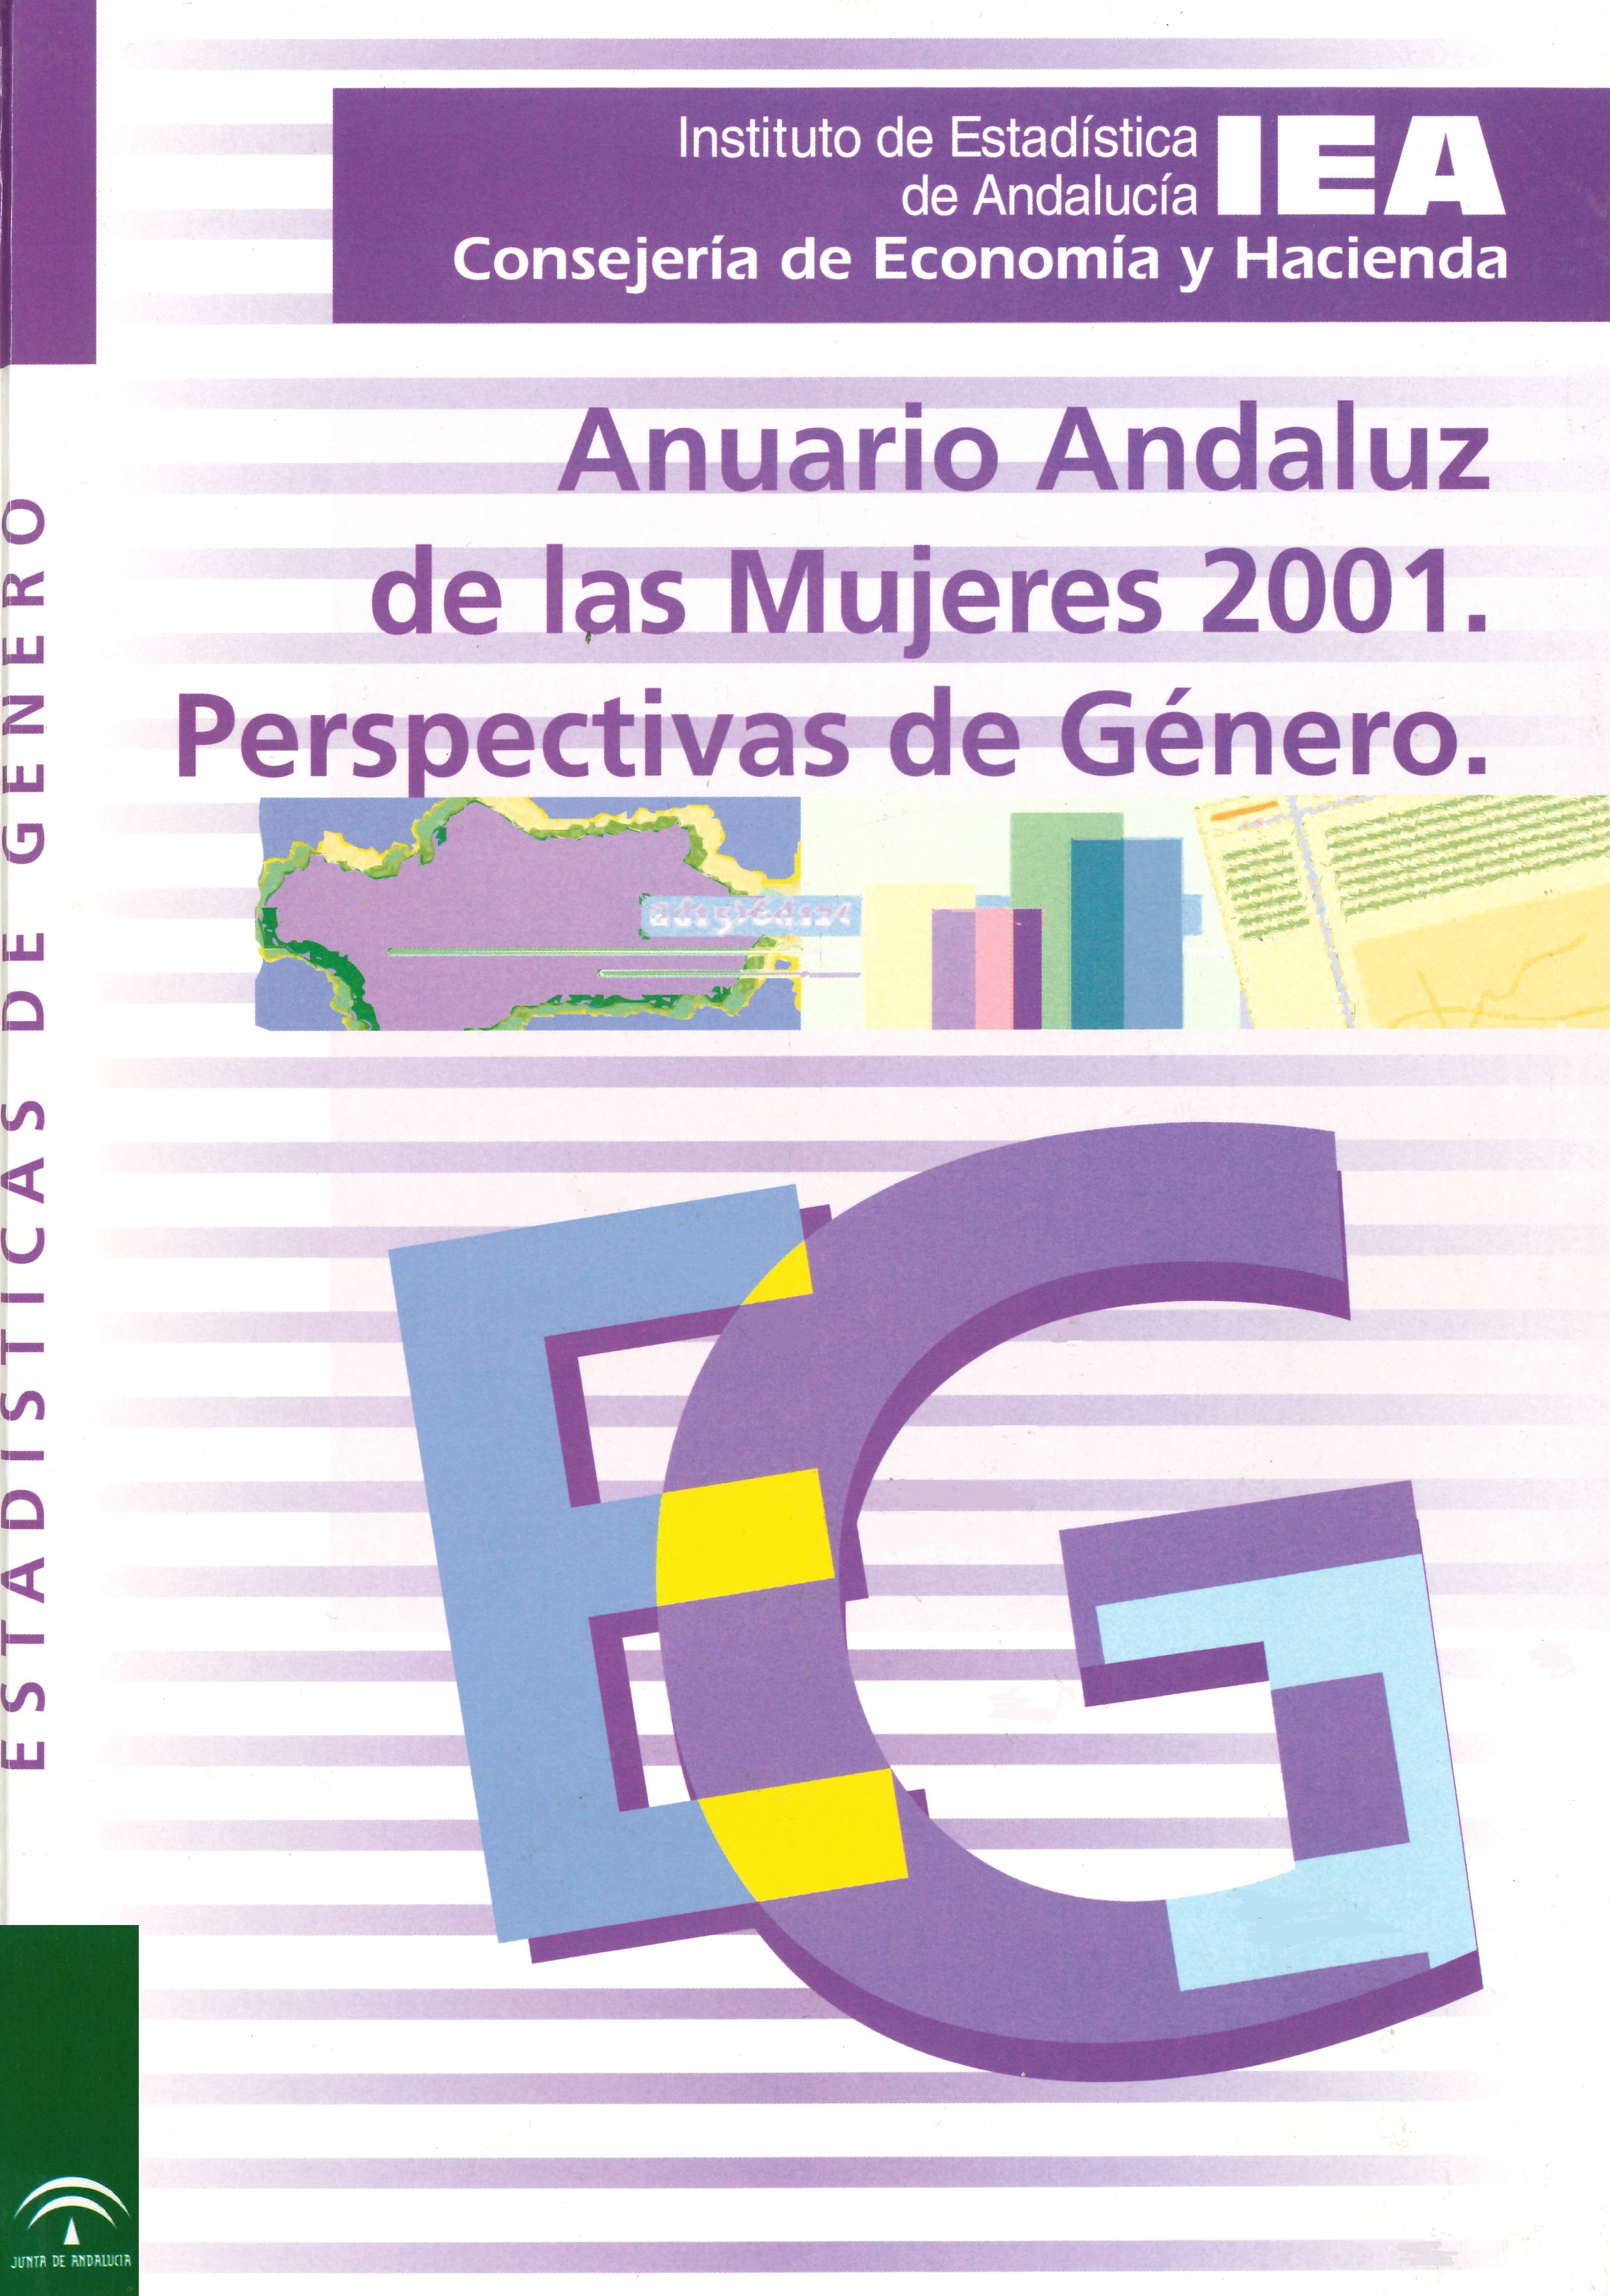 Anuario_andaluz_mujeres_perspectivas_género_2001